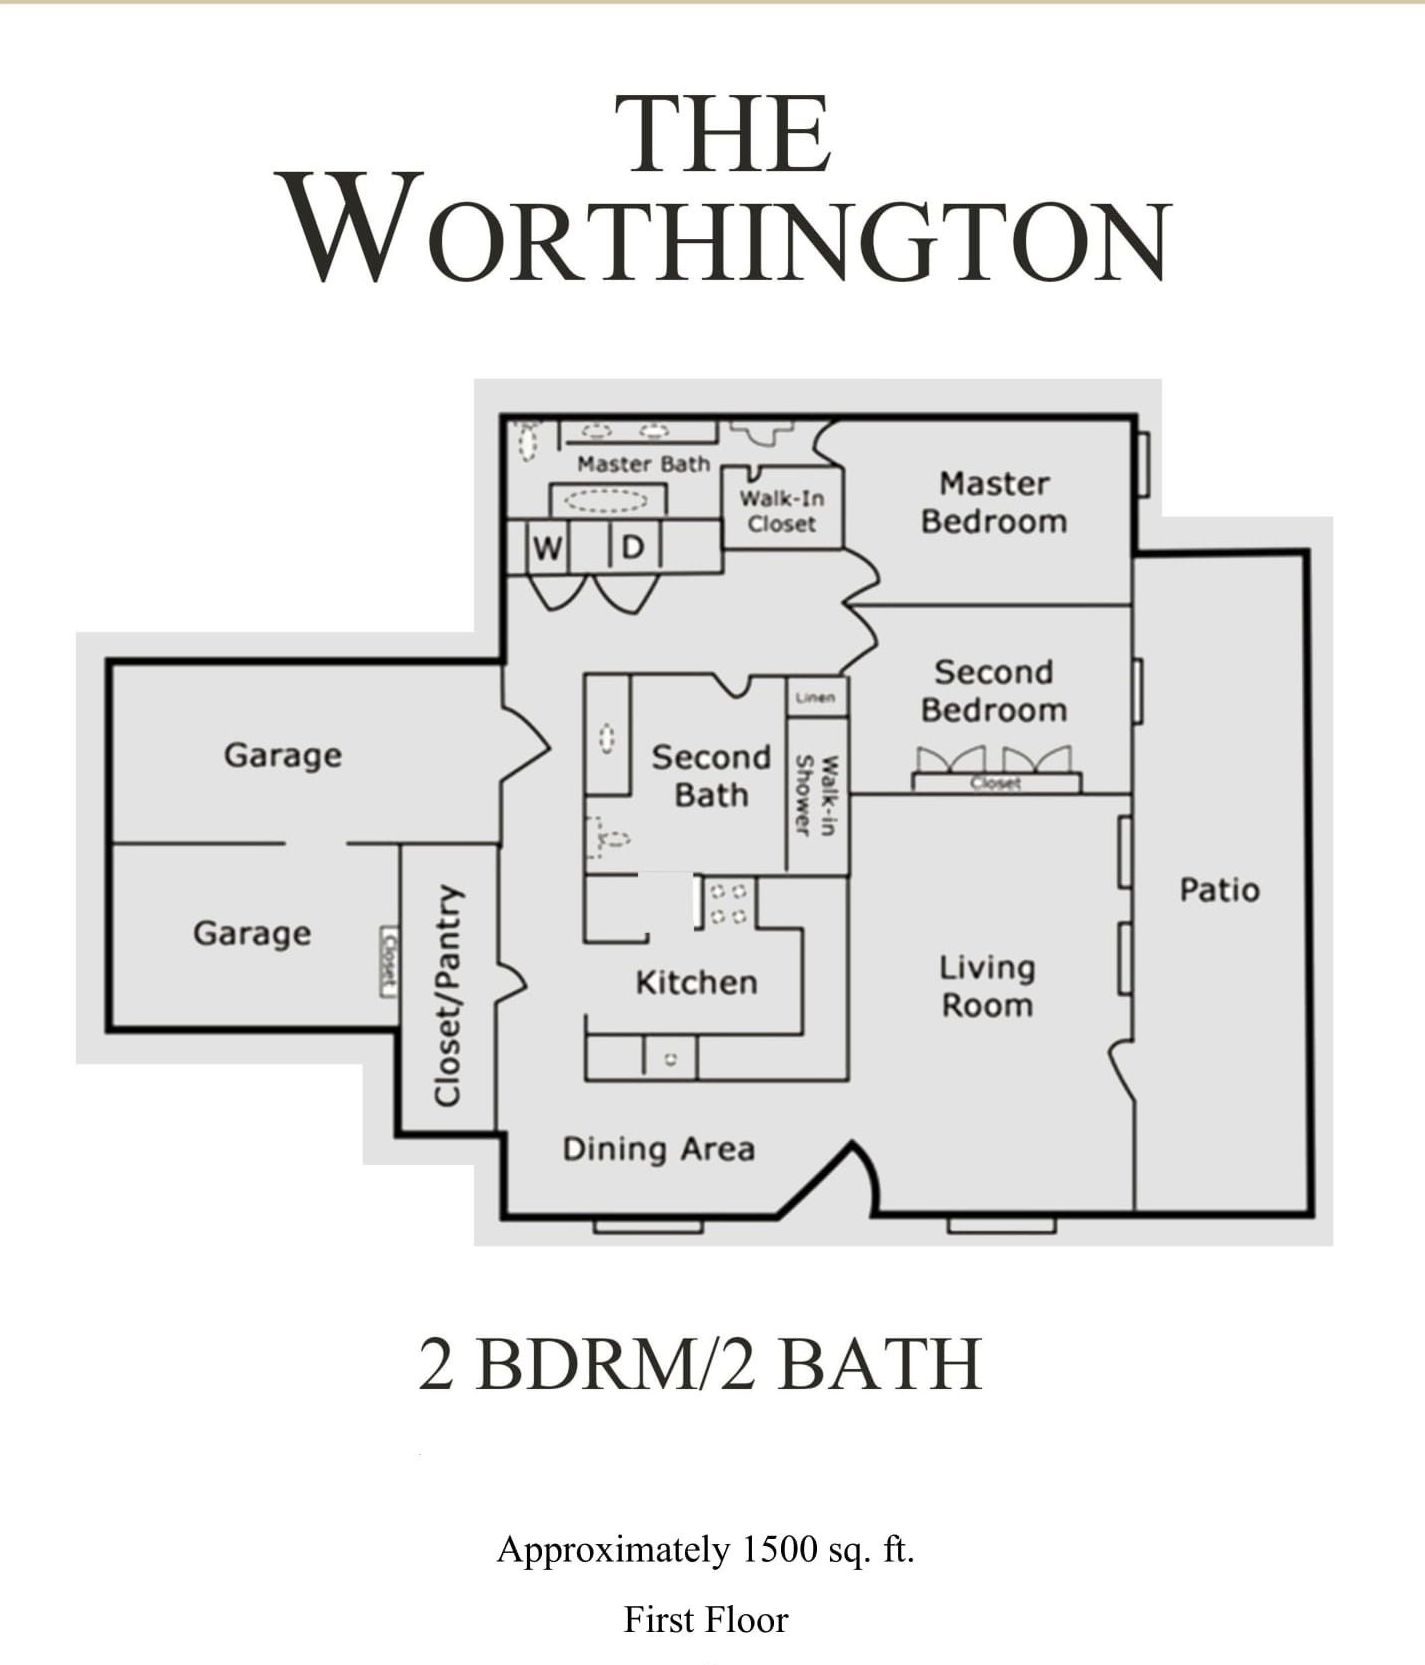 Worthington floor plan drawing